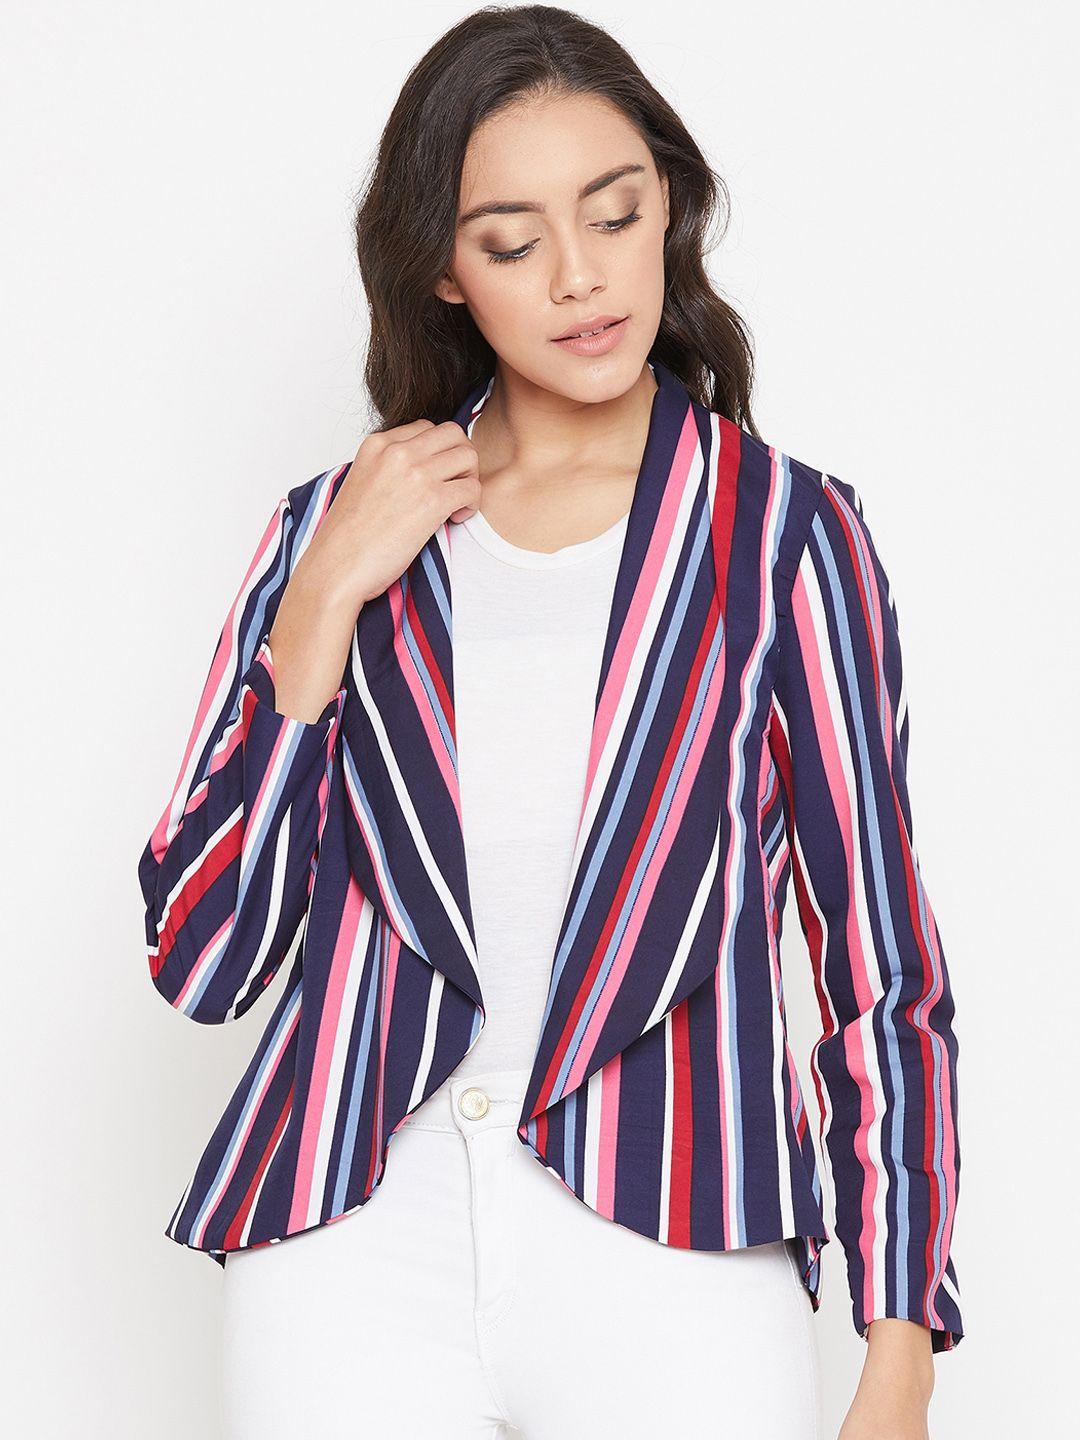 purys women navy blue & pink striped open front shrug